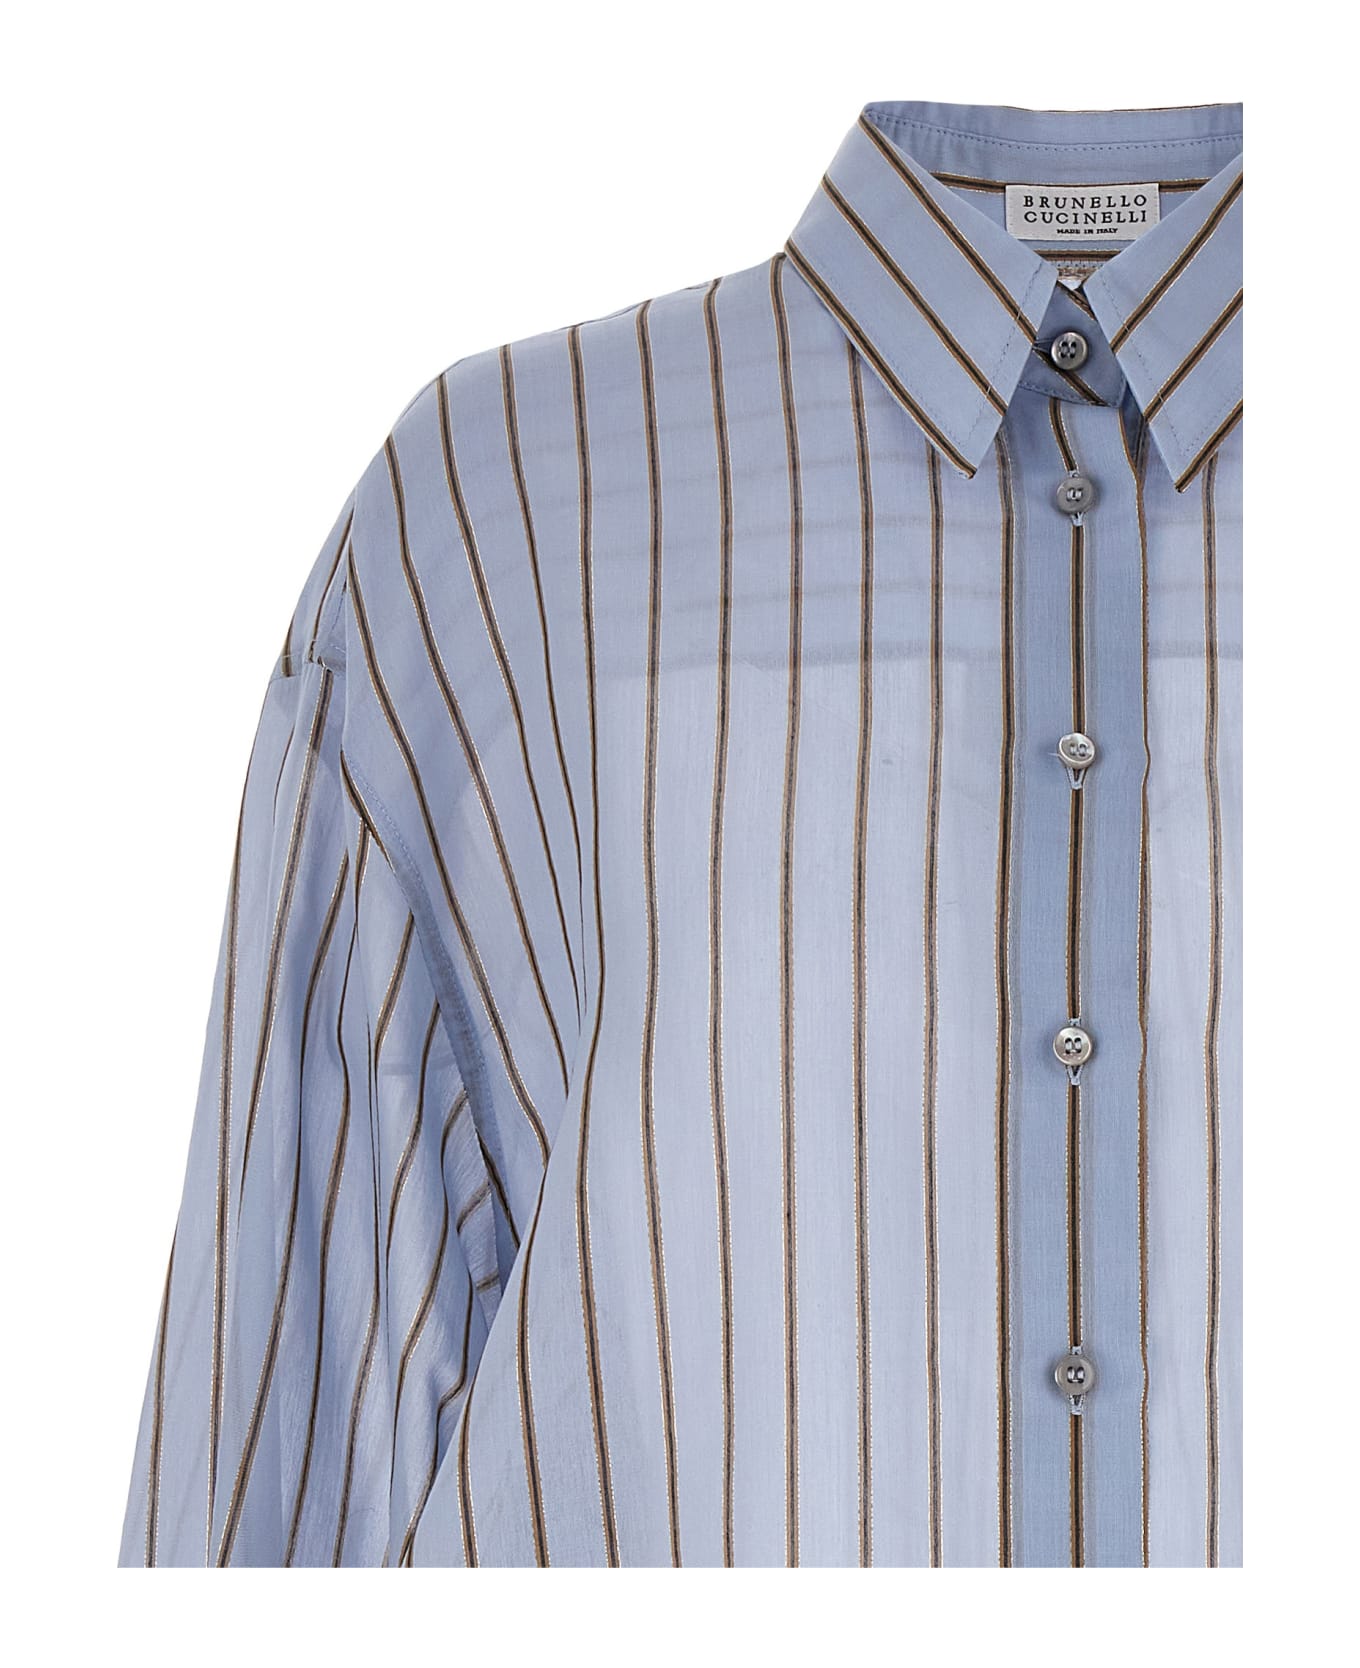 Brunello Cucinelli Striped Shirt - Light Blue シャツ